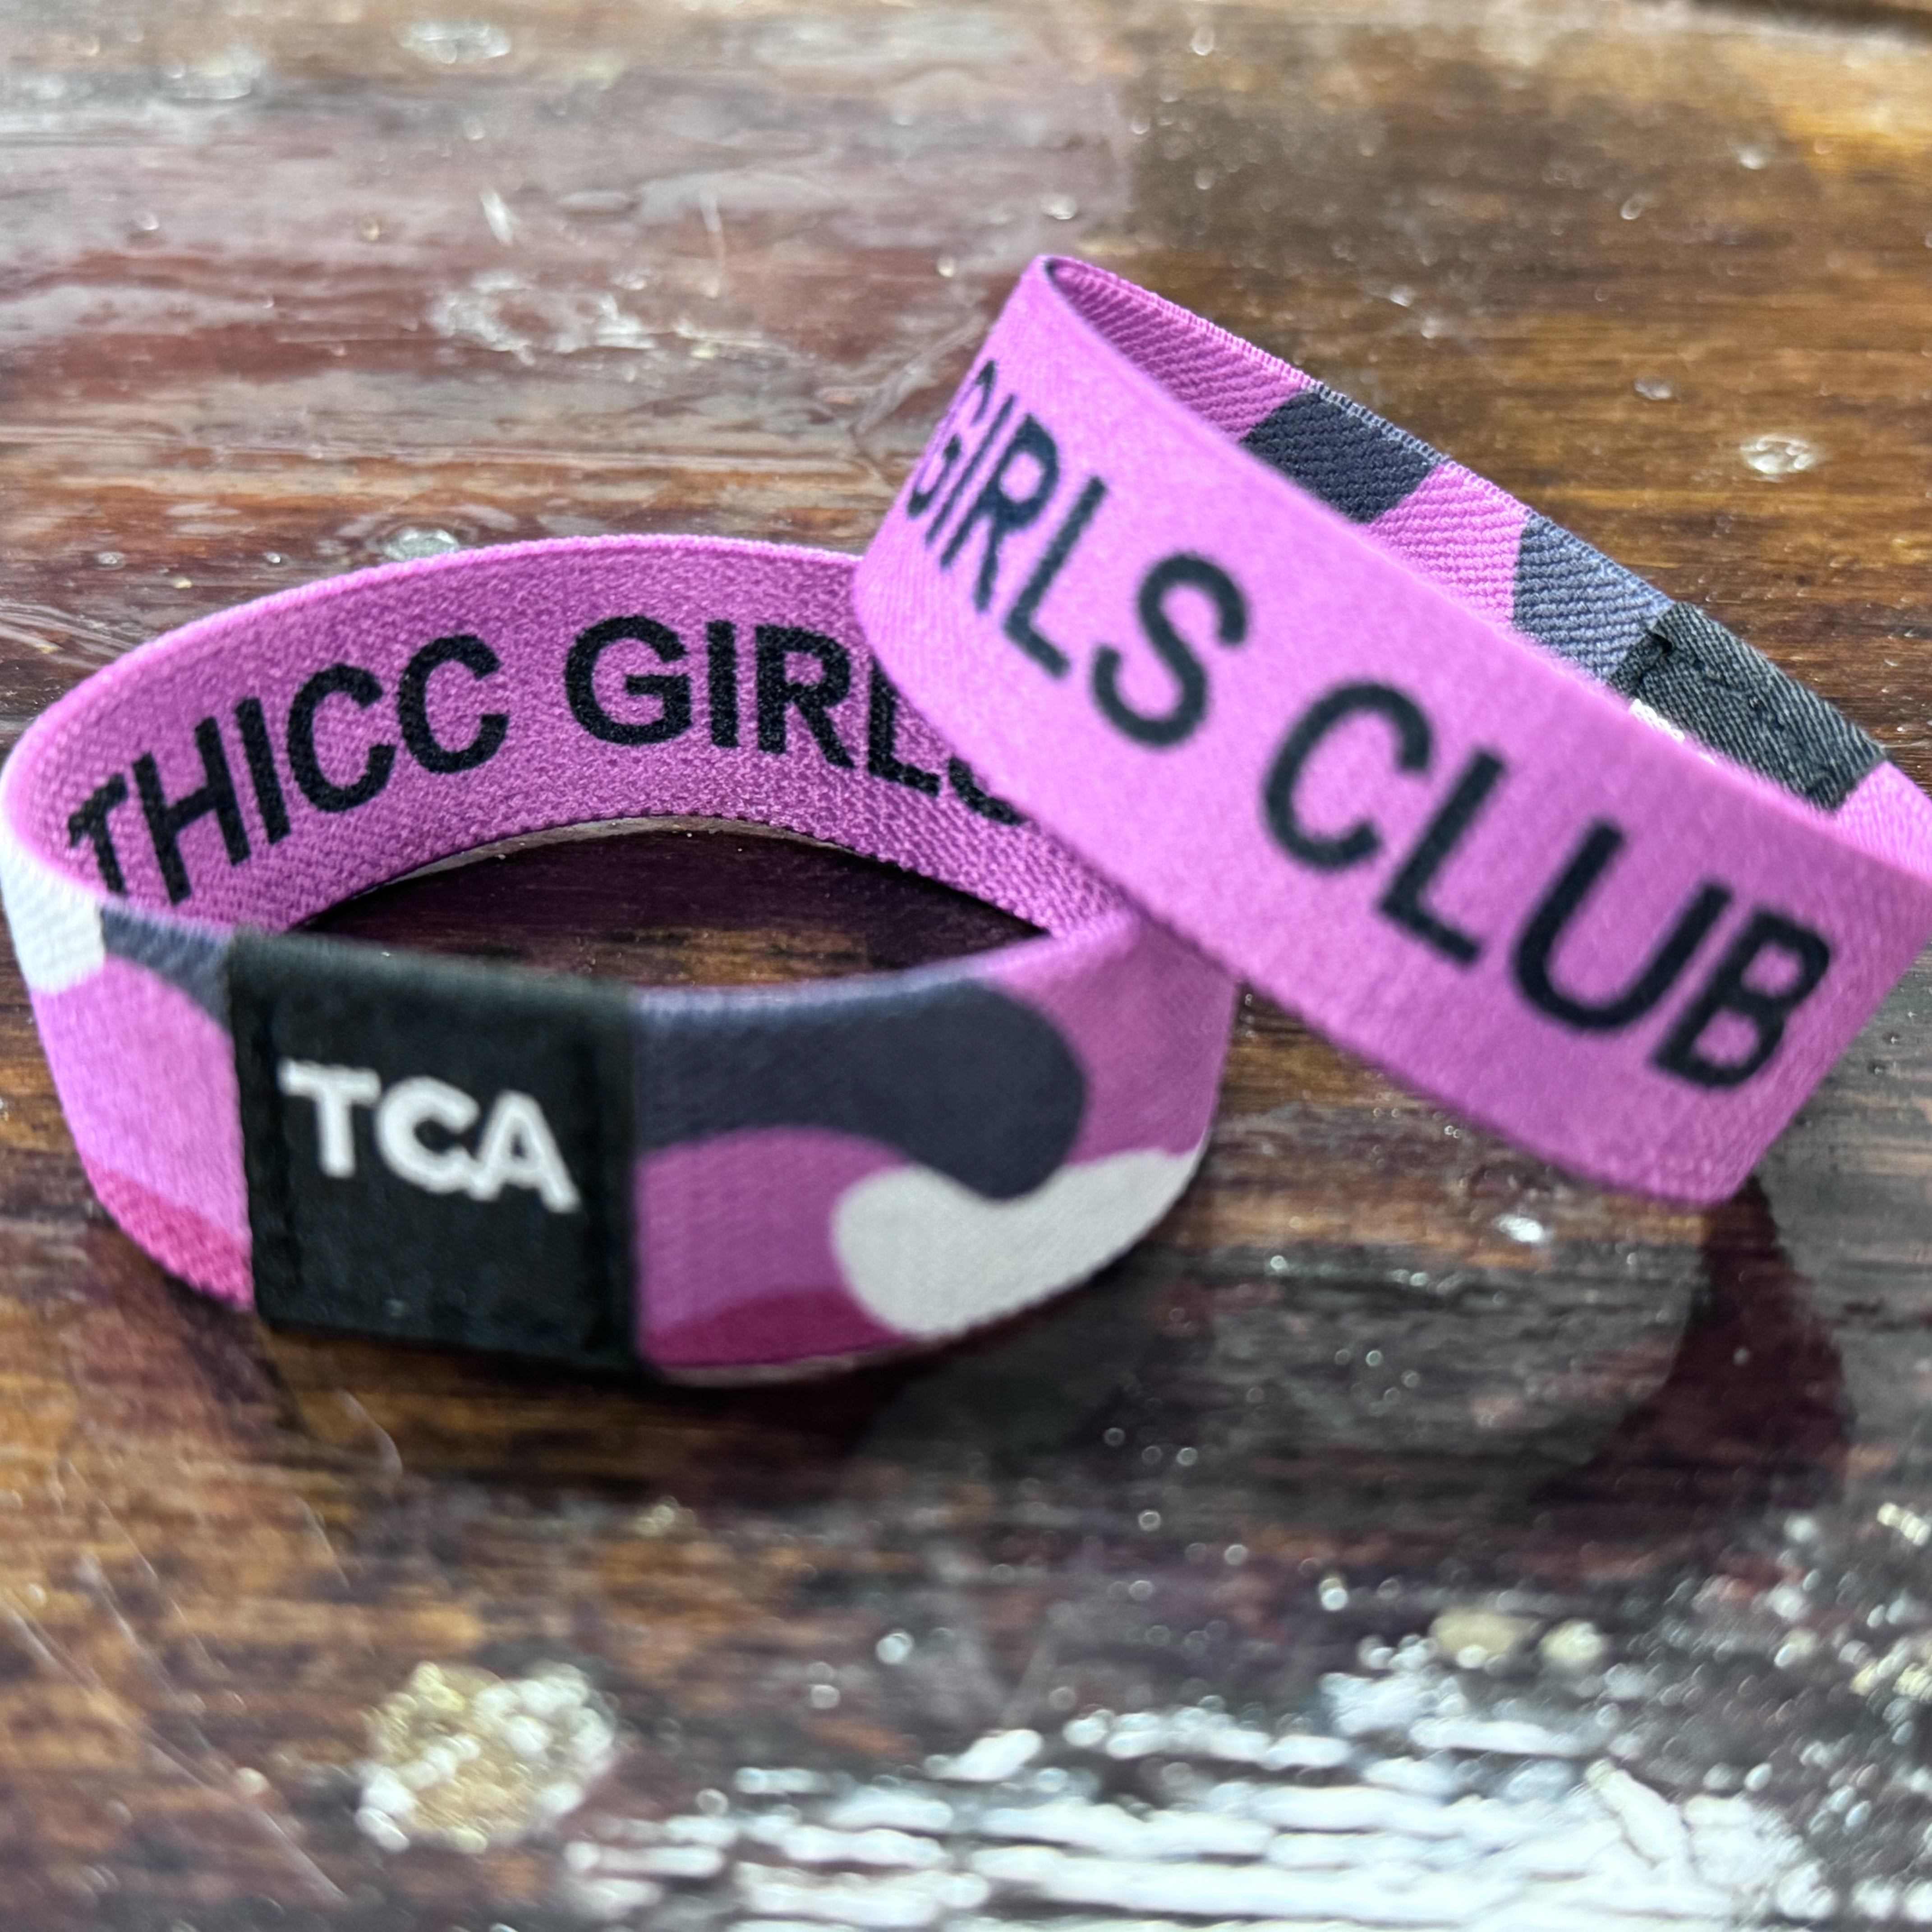 THICC Girls Club - Wristband